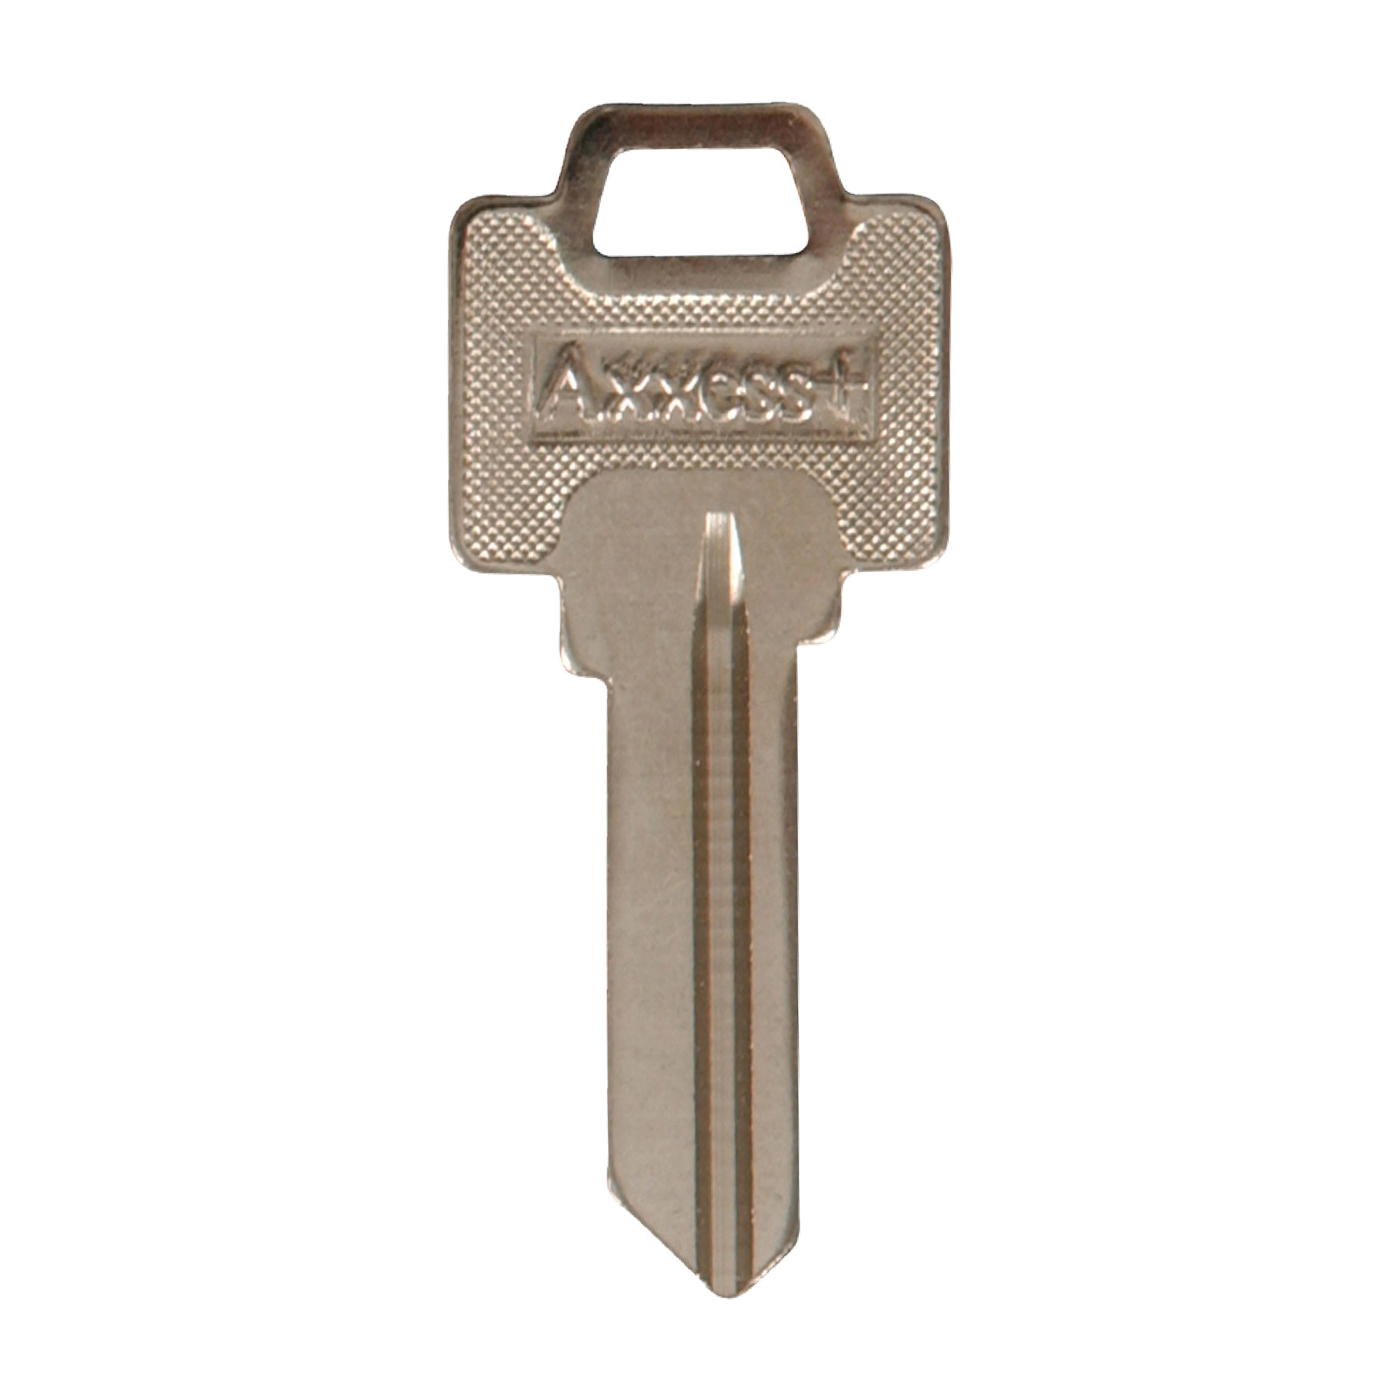 88047 Key Blank, Brass, Nickel-Plated, For: Weiser Locks